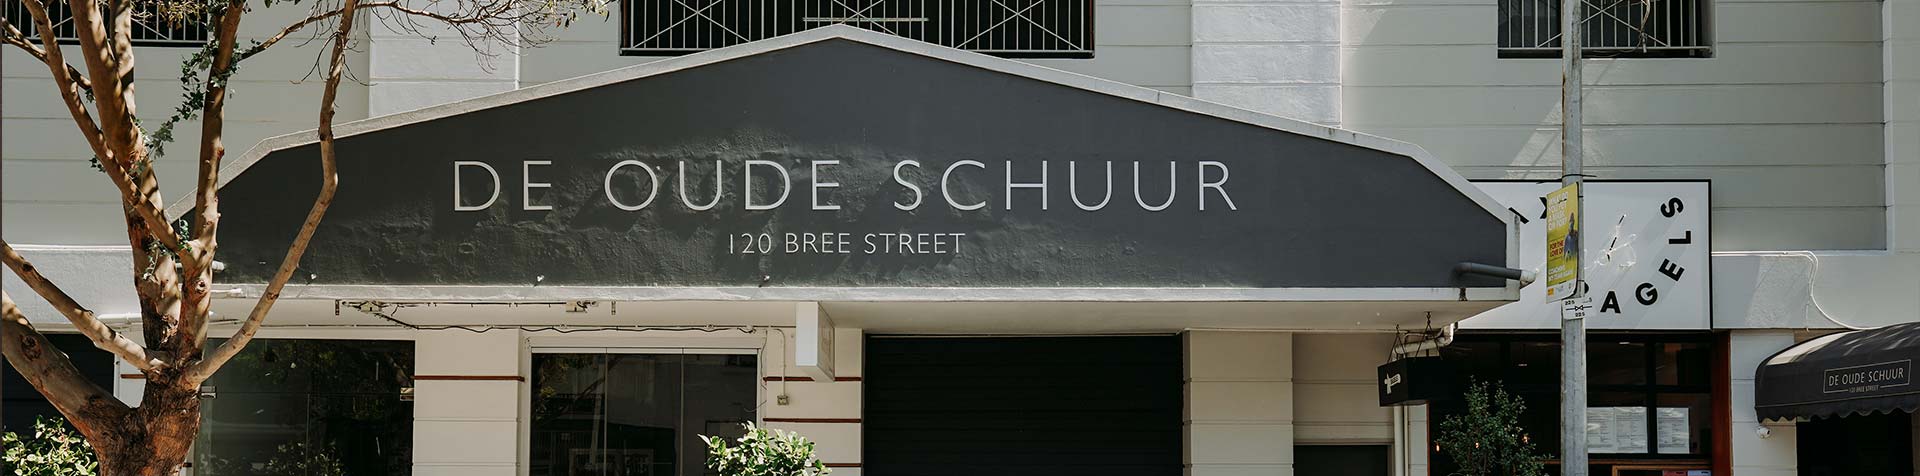 De Oude Schuur Bree Street banner 01